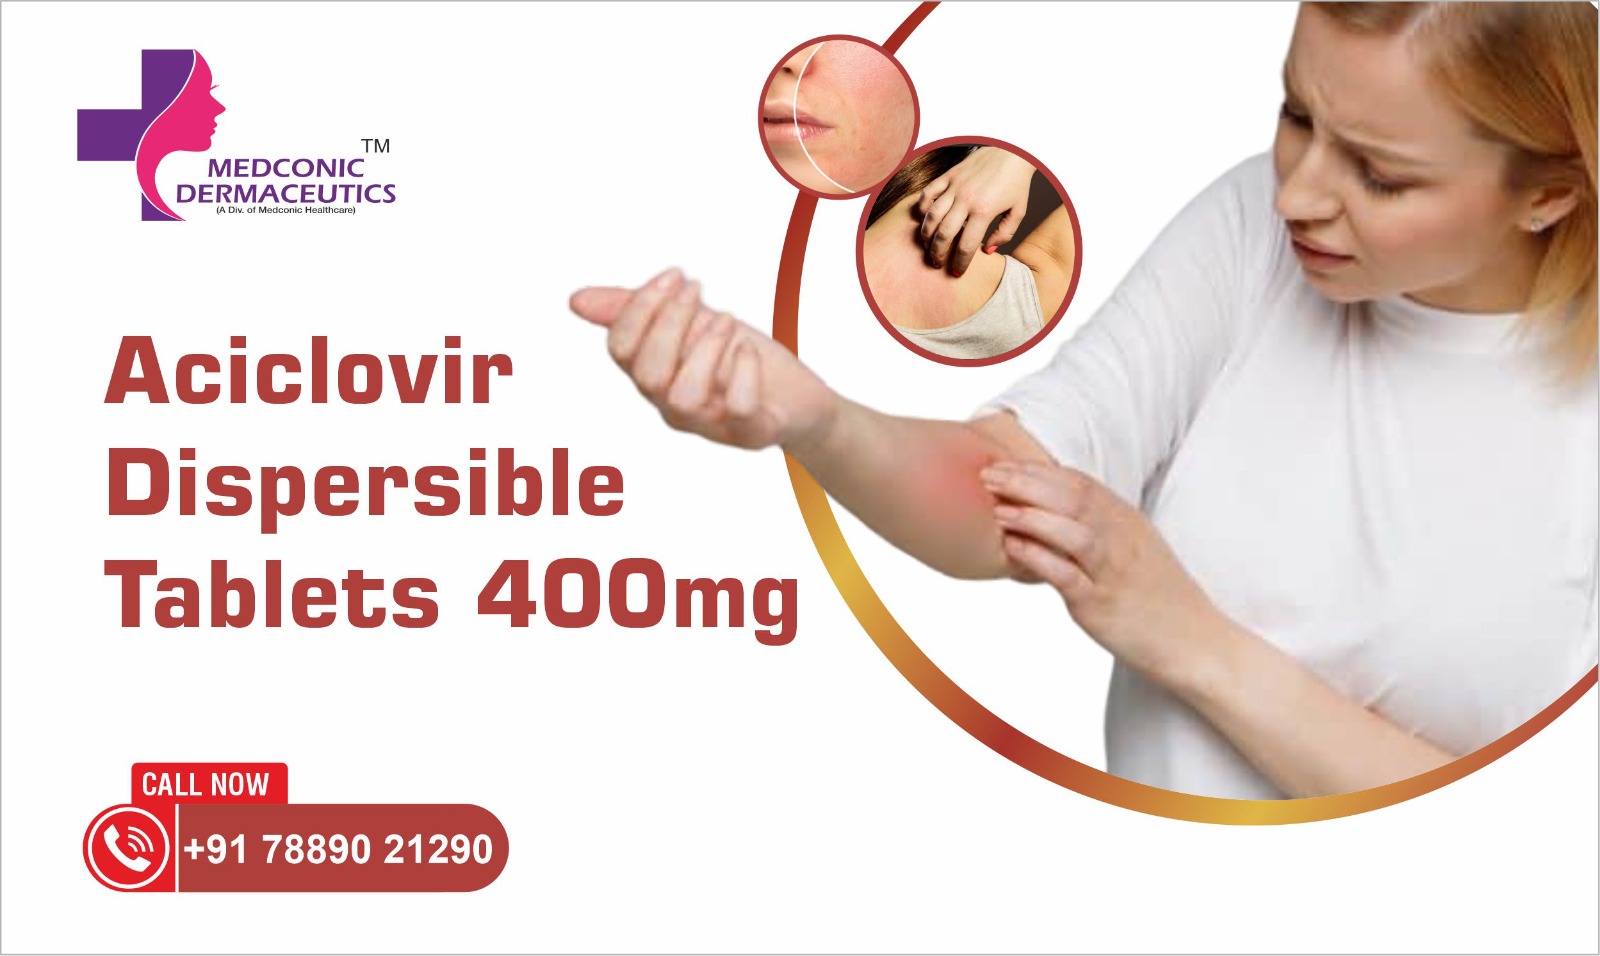 Aciclovir Dispersible Tablets 400mg